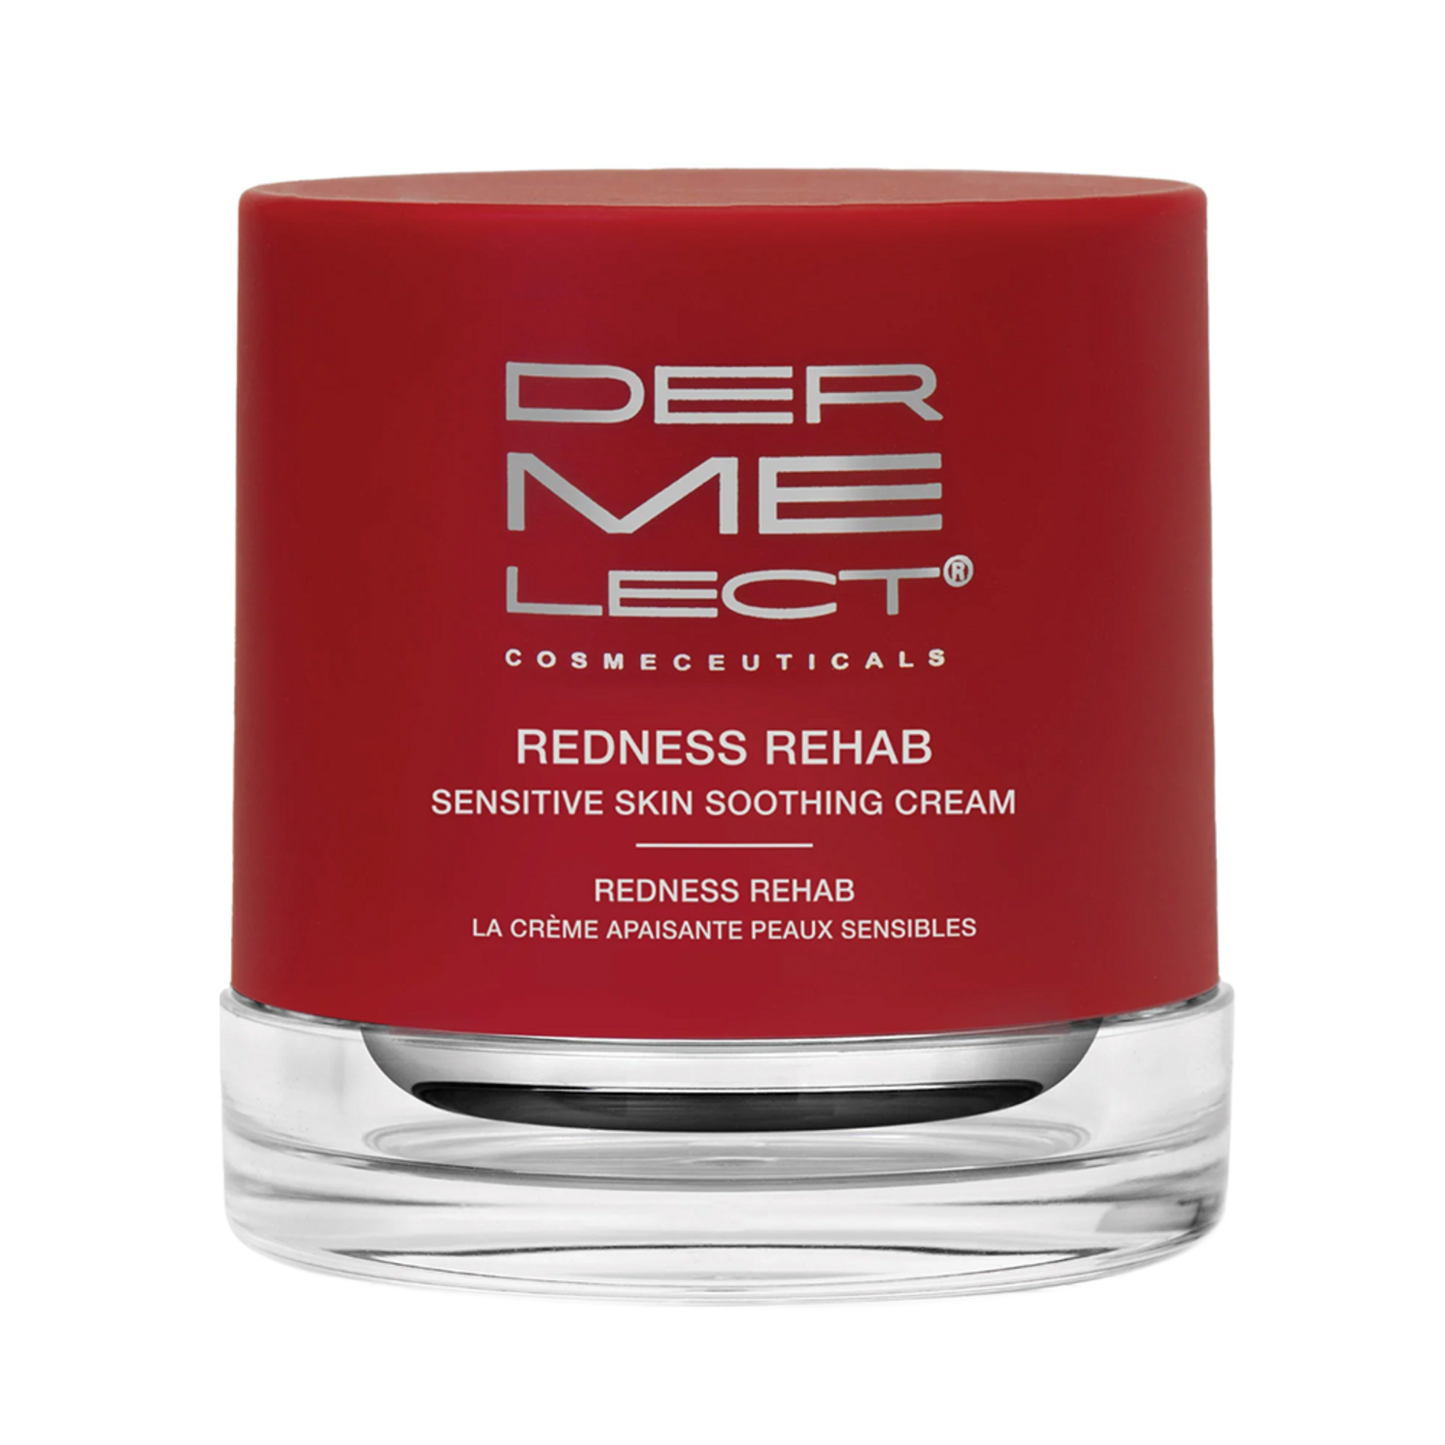 Dermelect Cosmeceuticals Redness Rehab Sensitive Skin Soothing Cream